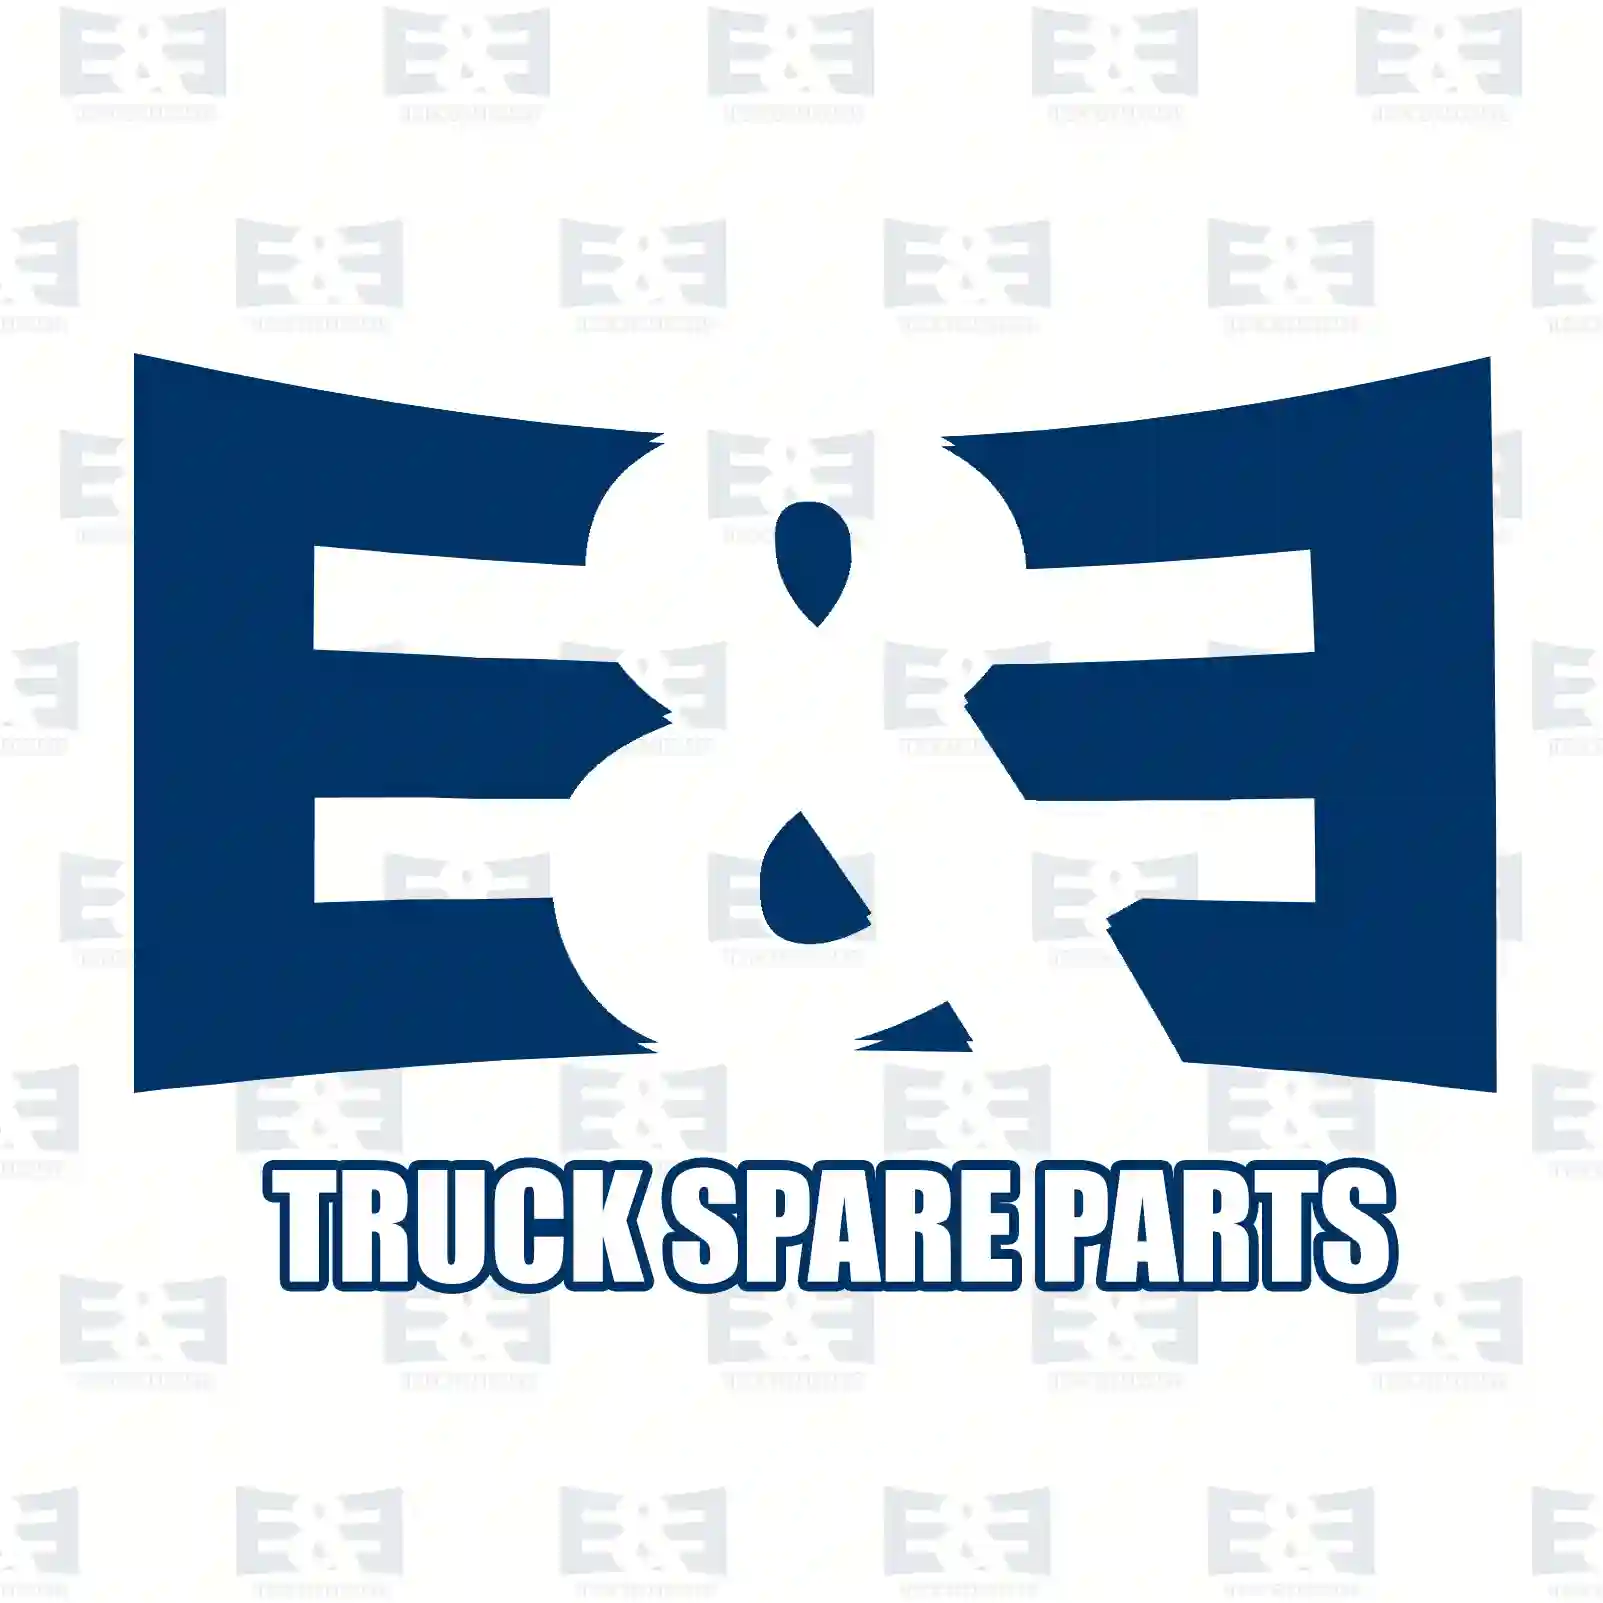 Cylinder head gasket kit, 2E2208489, 3520101280, 3520101380, 3520102080, 3520102180, 3520102621, 3520102721, 3520102780 ||  2E2208489 E&E Truck Spare Parts | Truck Spare Parts, Auotomotive Spare Parts Cylinder head gasket kit, 2E2208489, 3520101280, 3520101380, 3520102080, 3520102180, 3520102621, 3520102721, 3520102780 ||  2E2208489 E&E Truck Spare Parts | Truck Spare Parts, Auotomotive Spare Parts